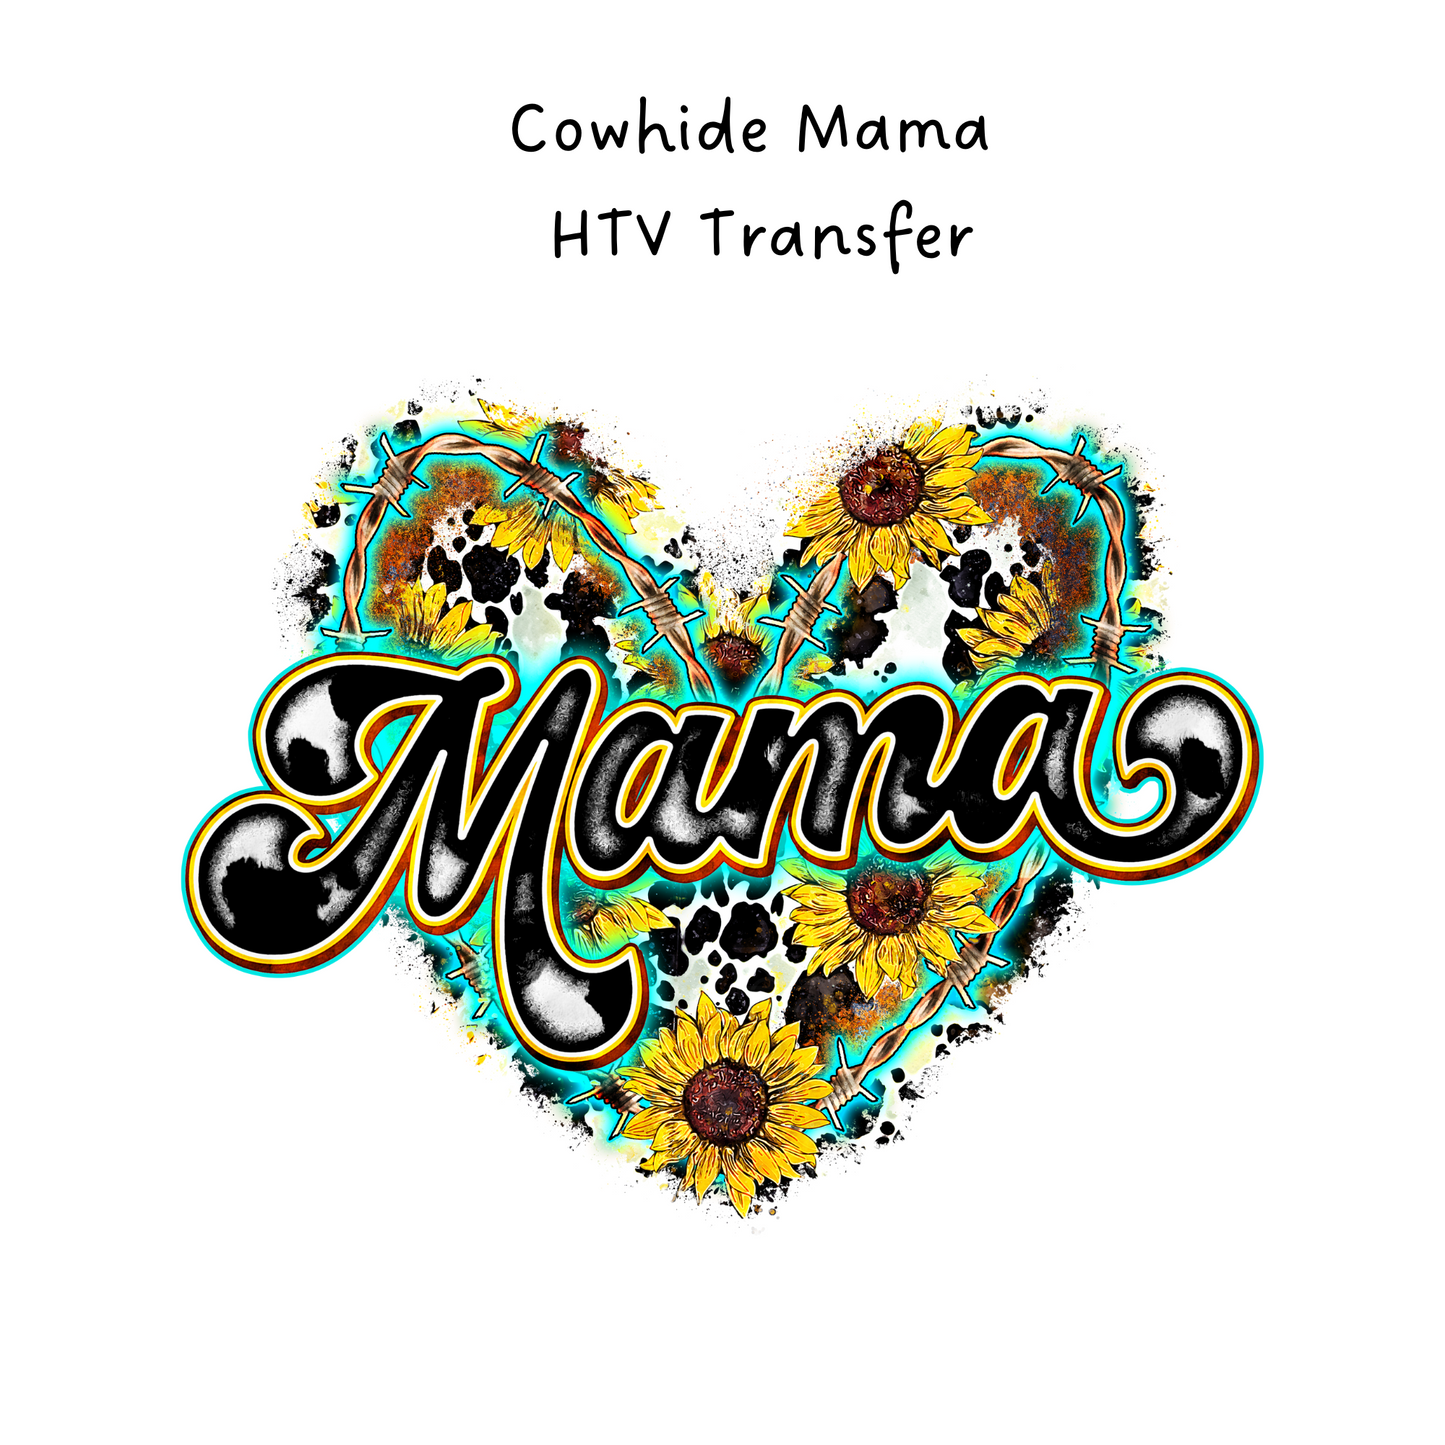 Cowhide Mama HTV Transfer